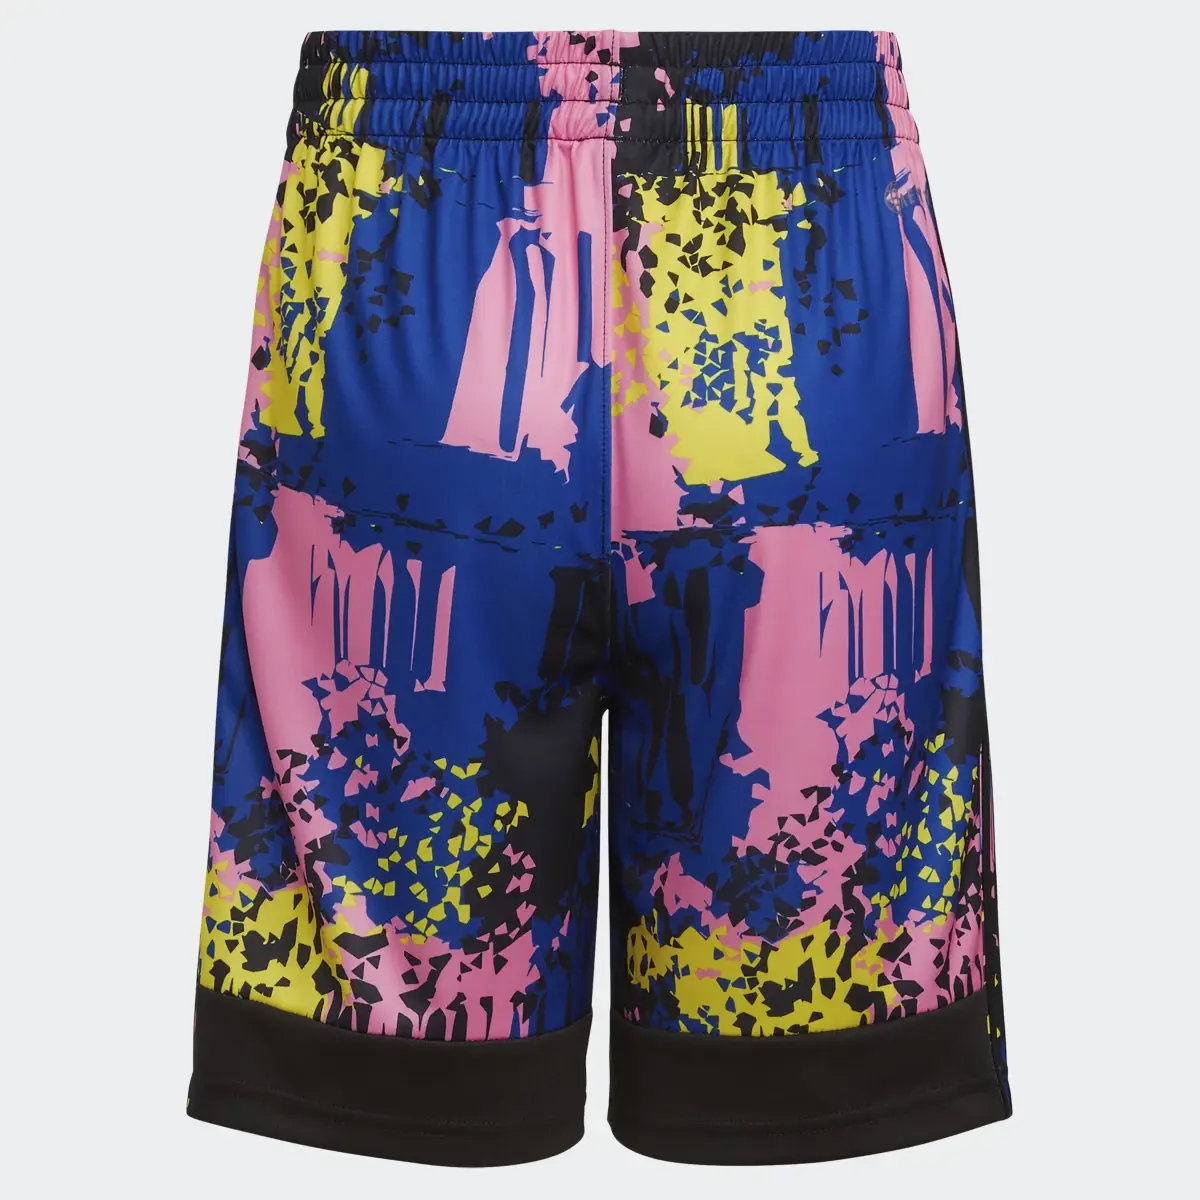 Adidas Back to Nature Allover Print Shorts. 3